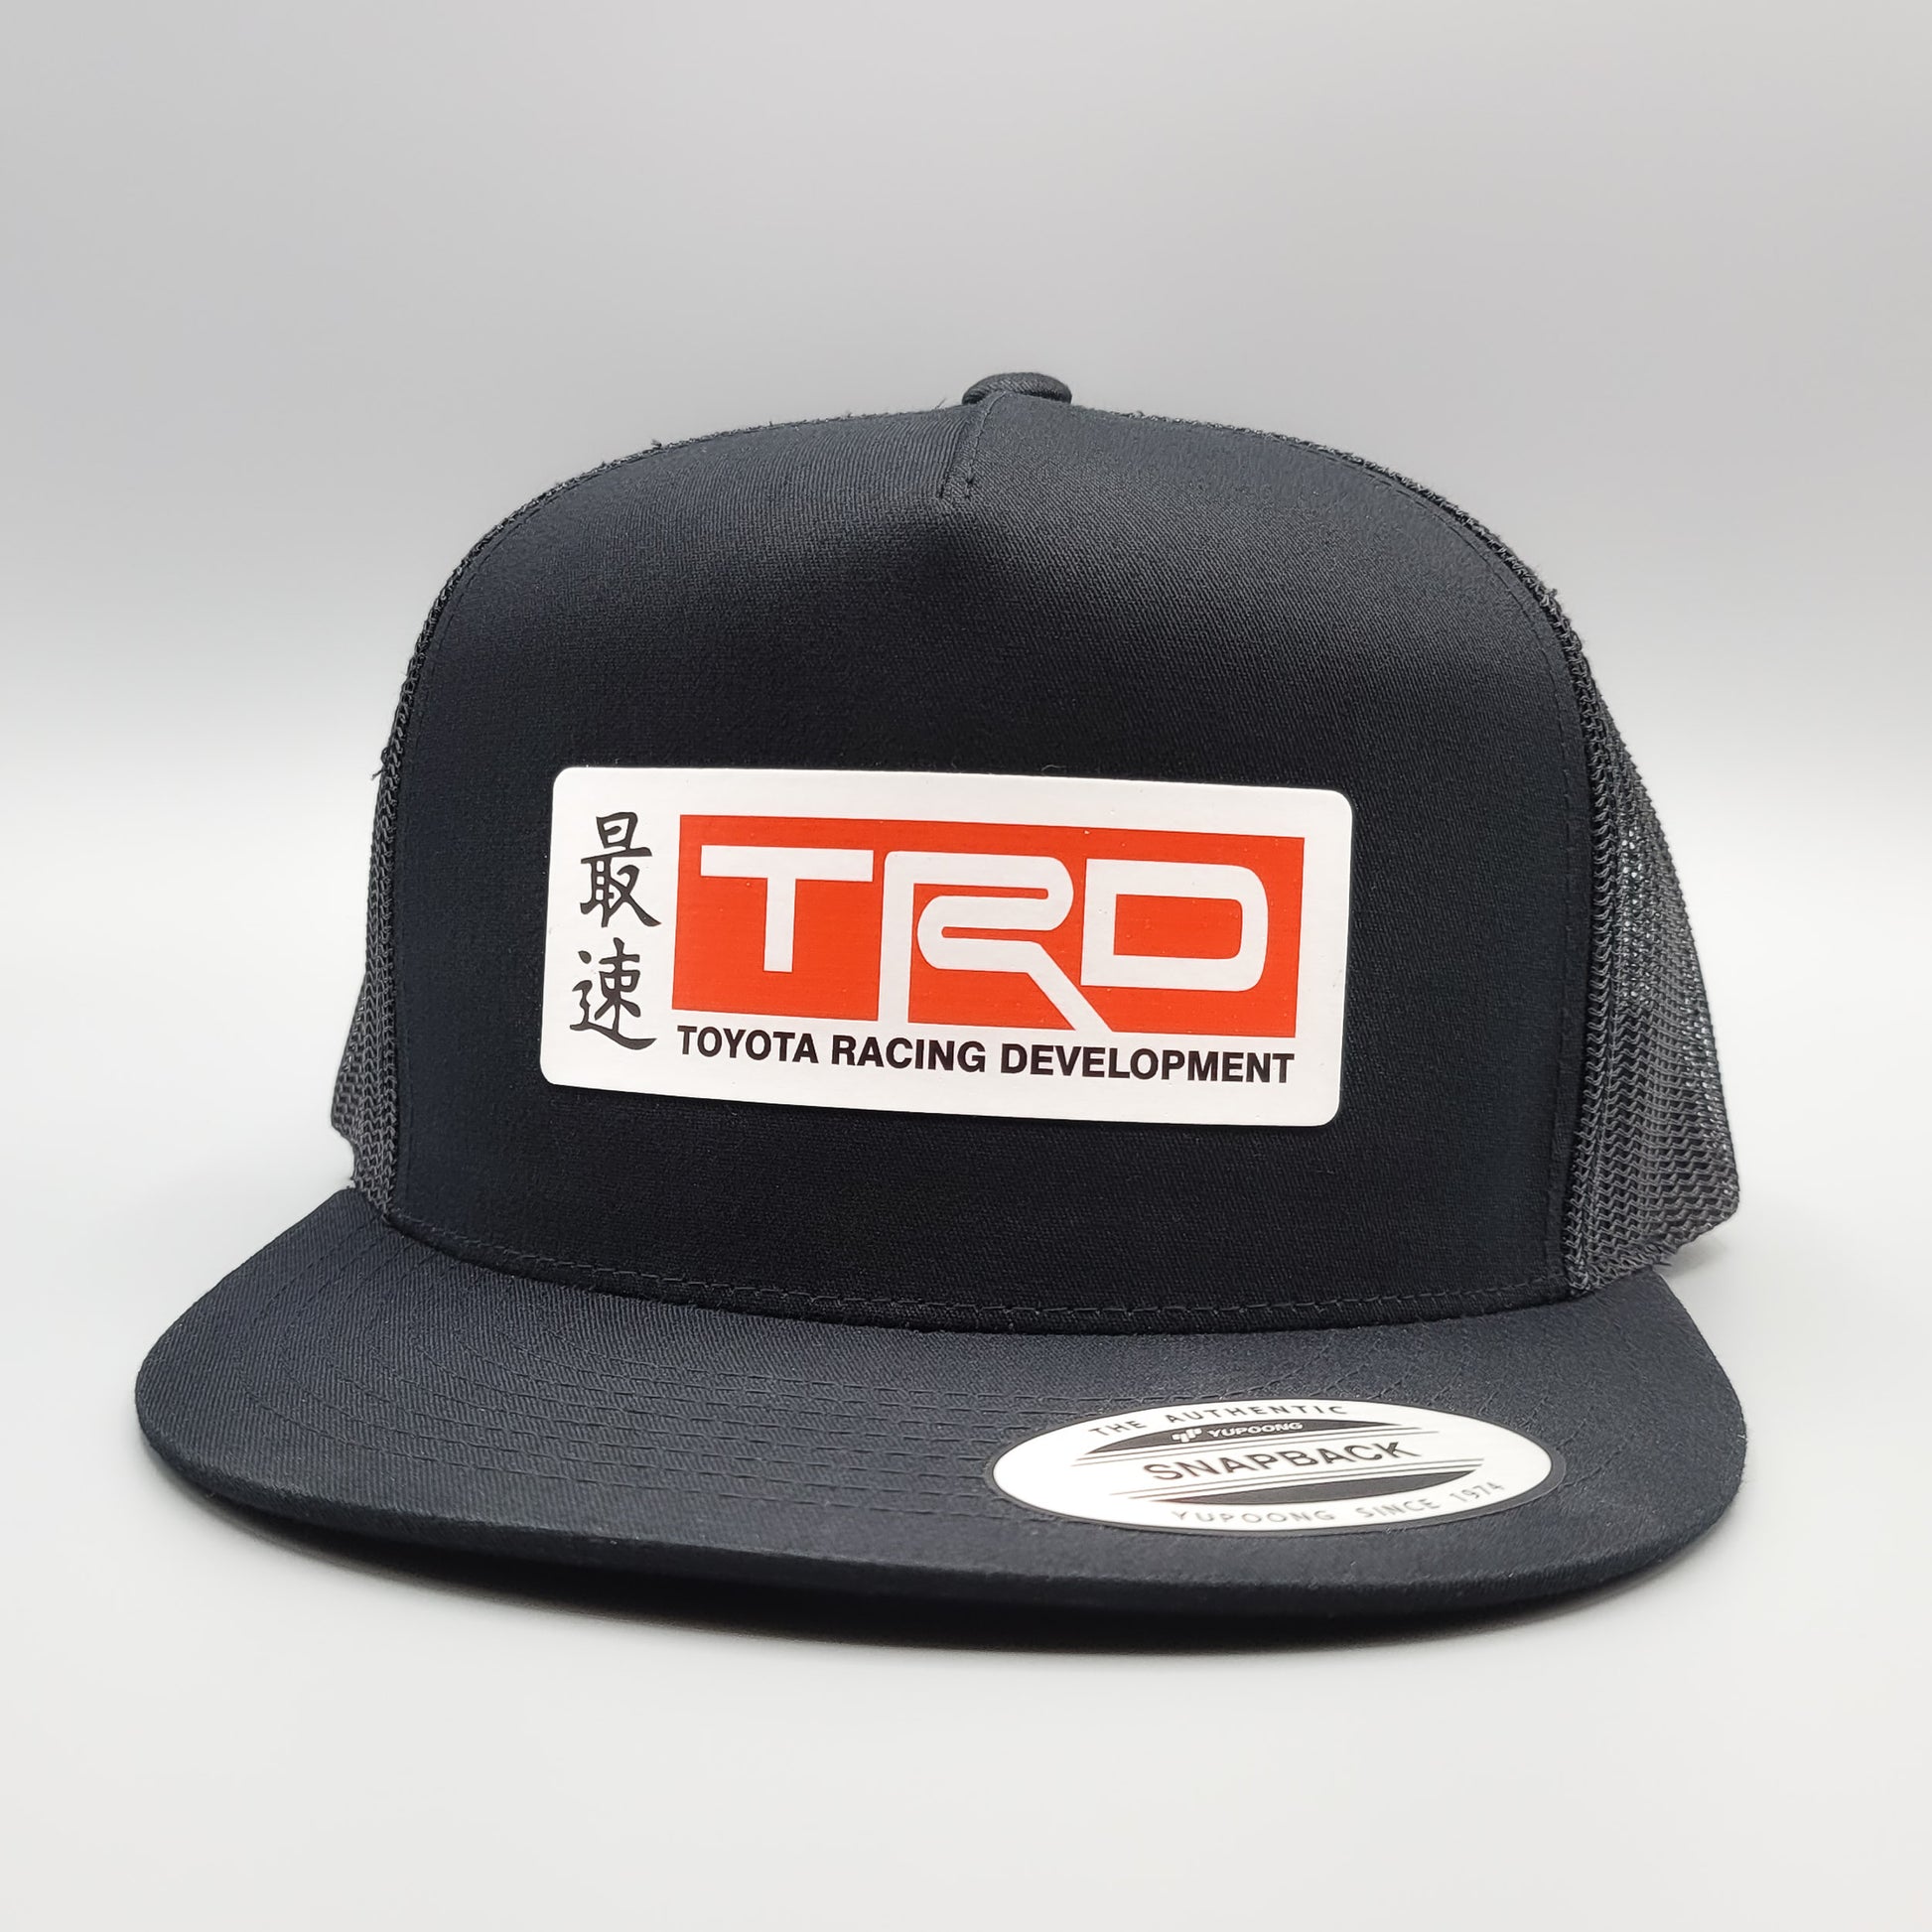 Toyota Hat, Japanese Trucker Hat, TRD Toyota Racing Development, Flat Bill Cap